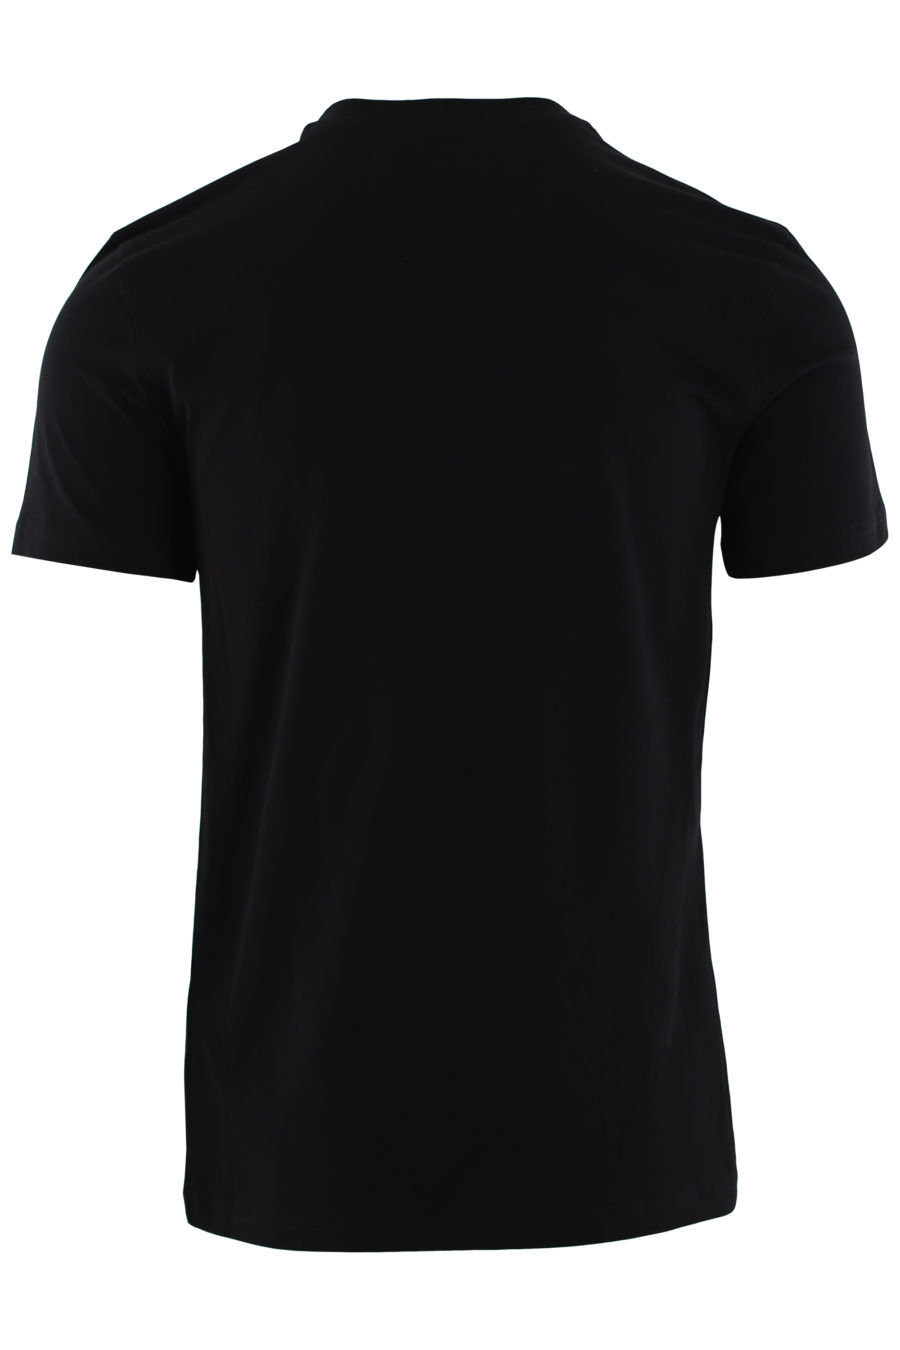 Camiseta negra con logo grande - IMG 0389